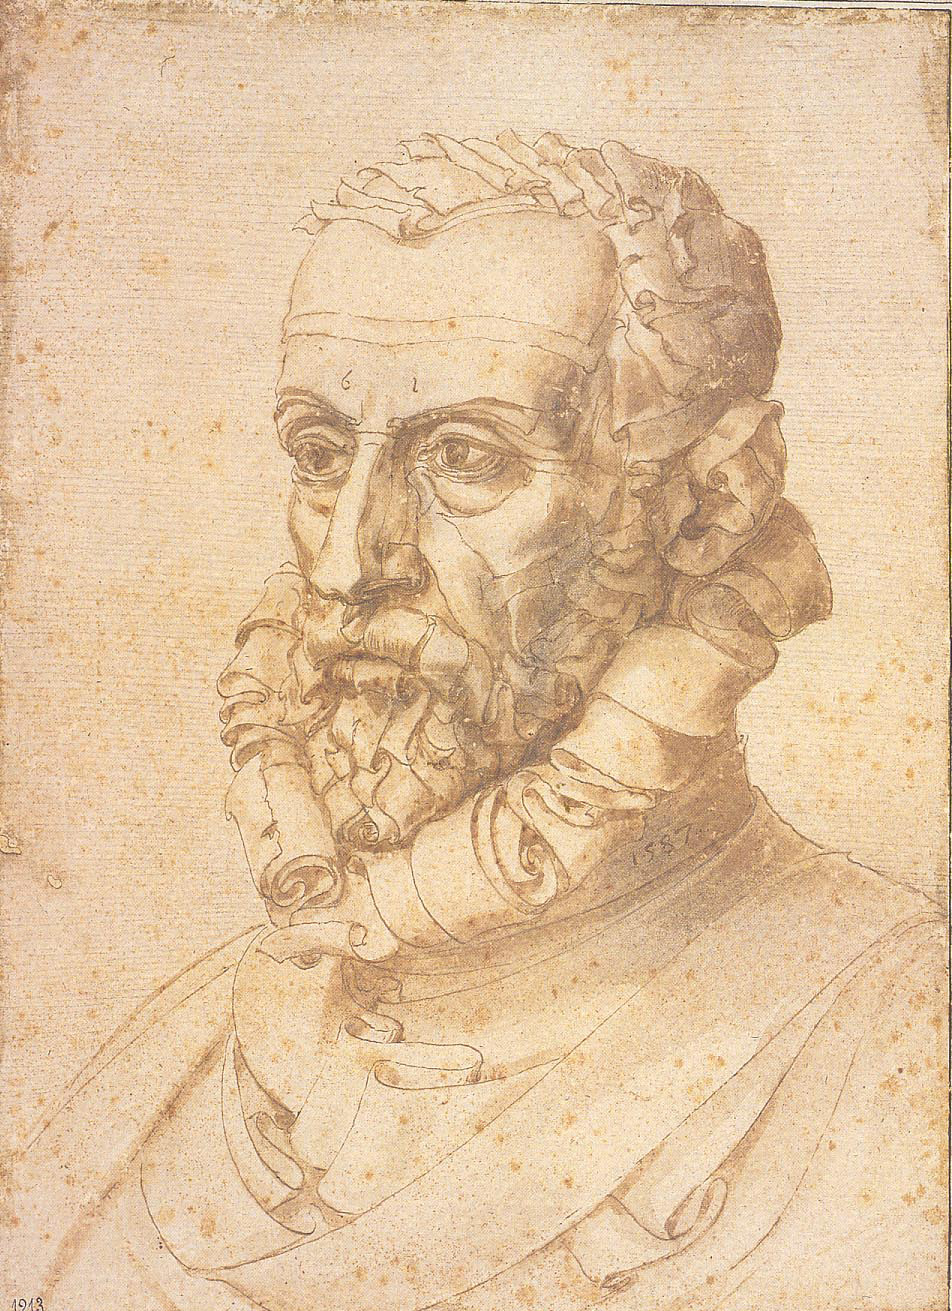 Arcimboldo, Self-portrait ("Man of letters")